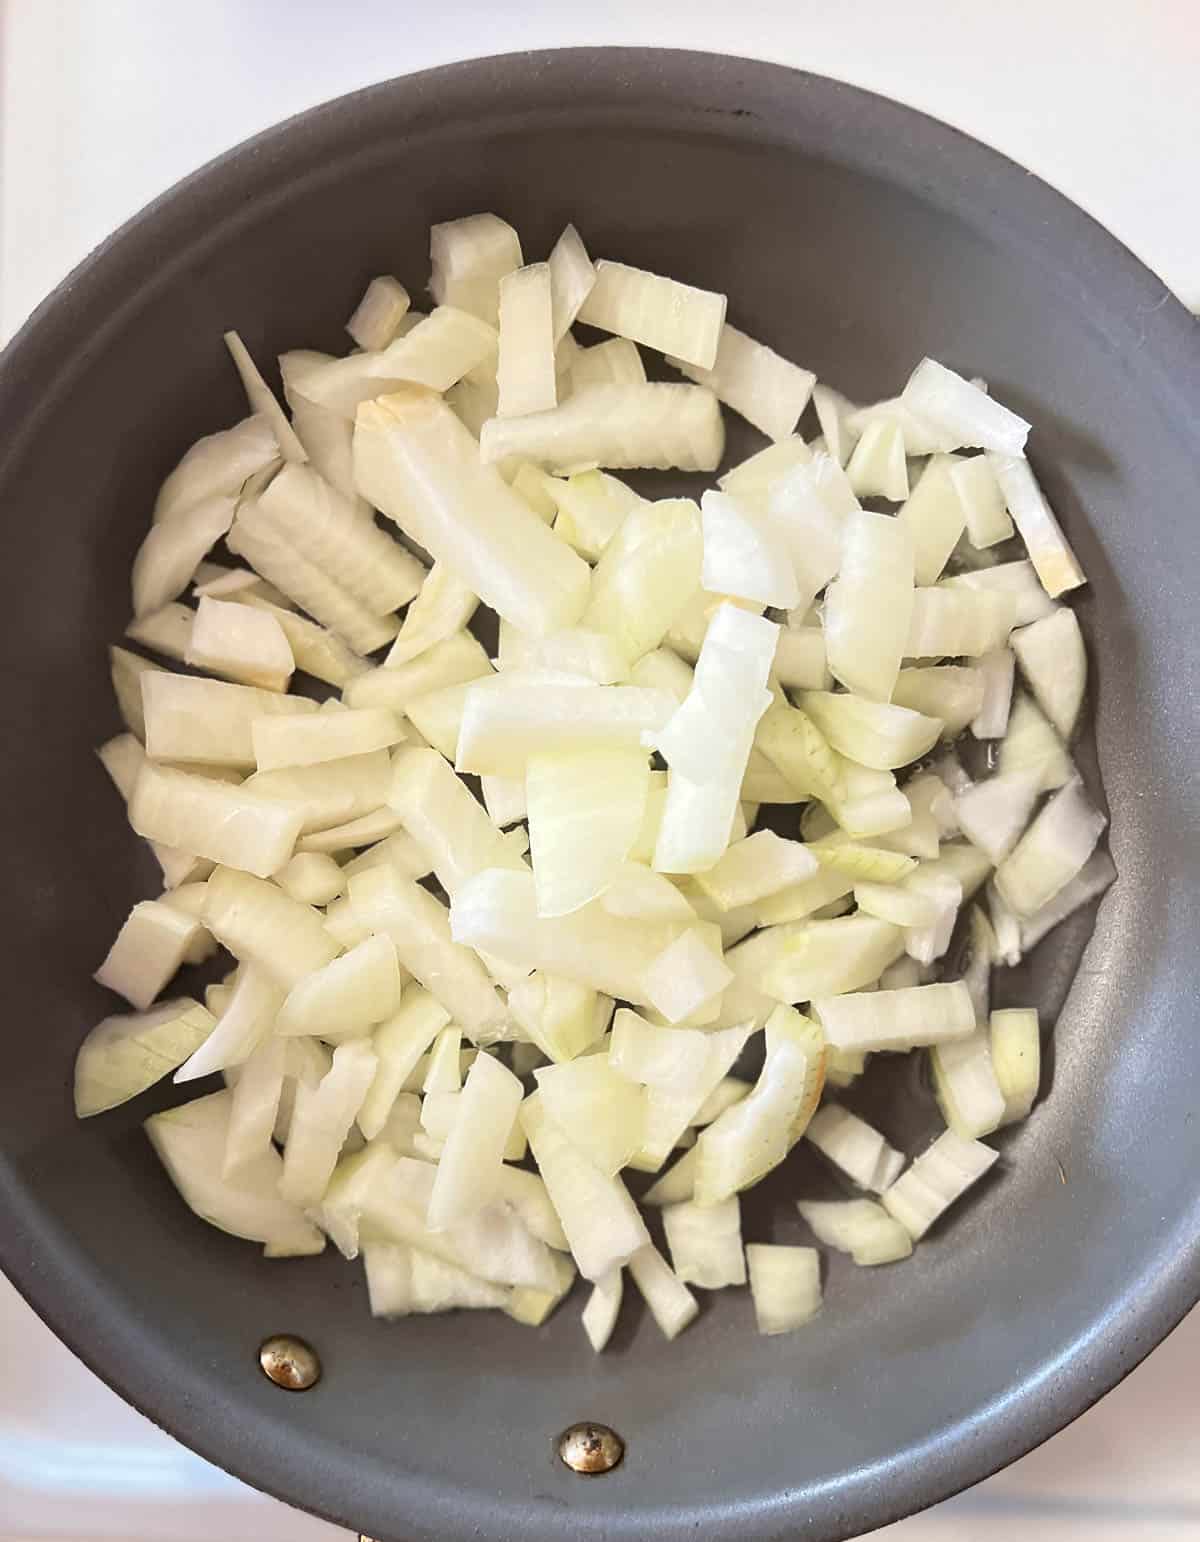 Steps to make onion samosas.